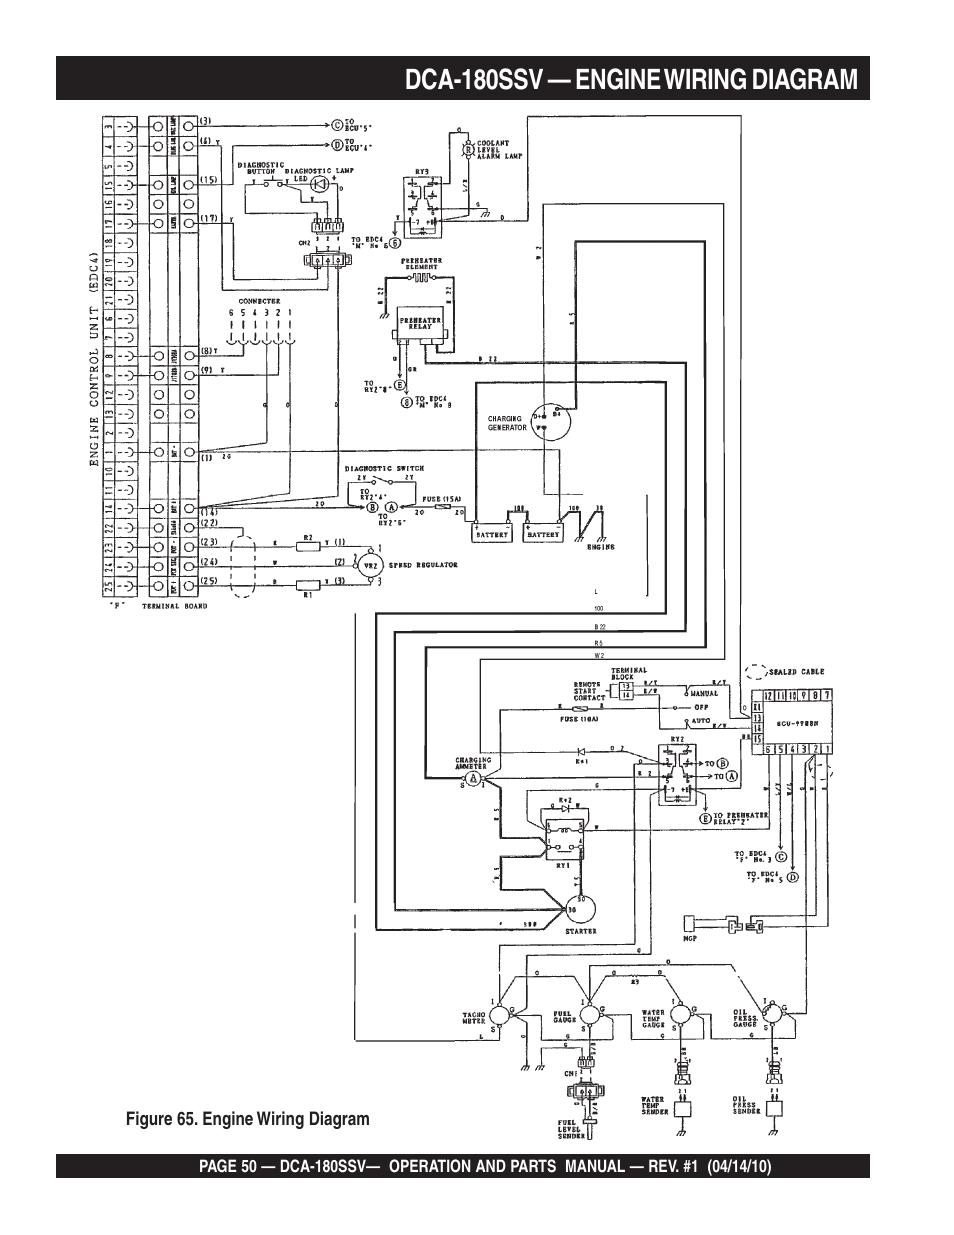 Dca-180ssv — engine wiring diagram | Multiquip MQ Power Whisperwatt 60 Hz  Generator DCA-180SSV User Manual | Page 50 / 84  Hz Engine Wiring Diagram    Manuals Directory